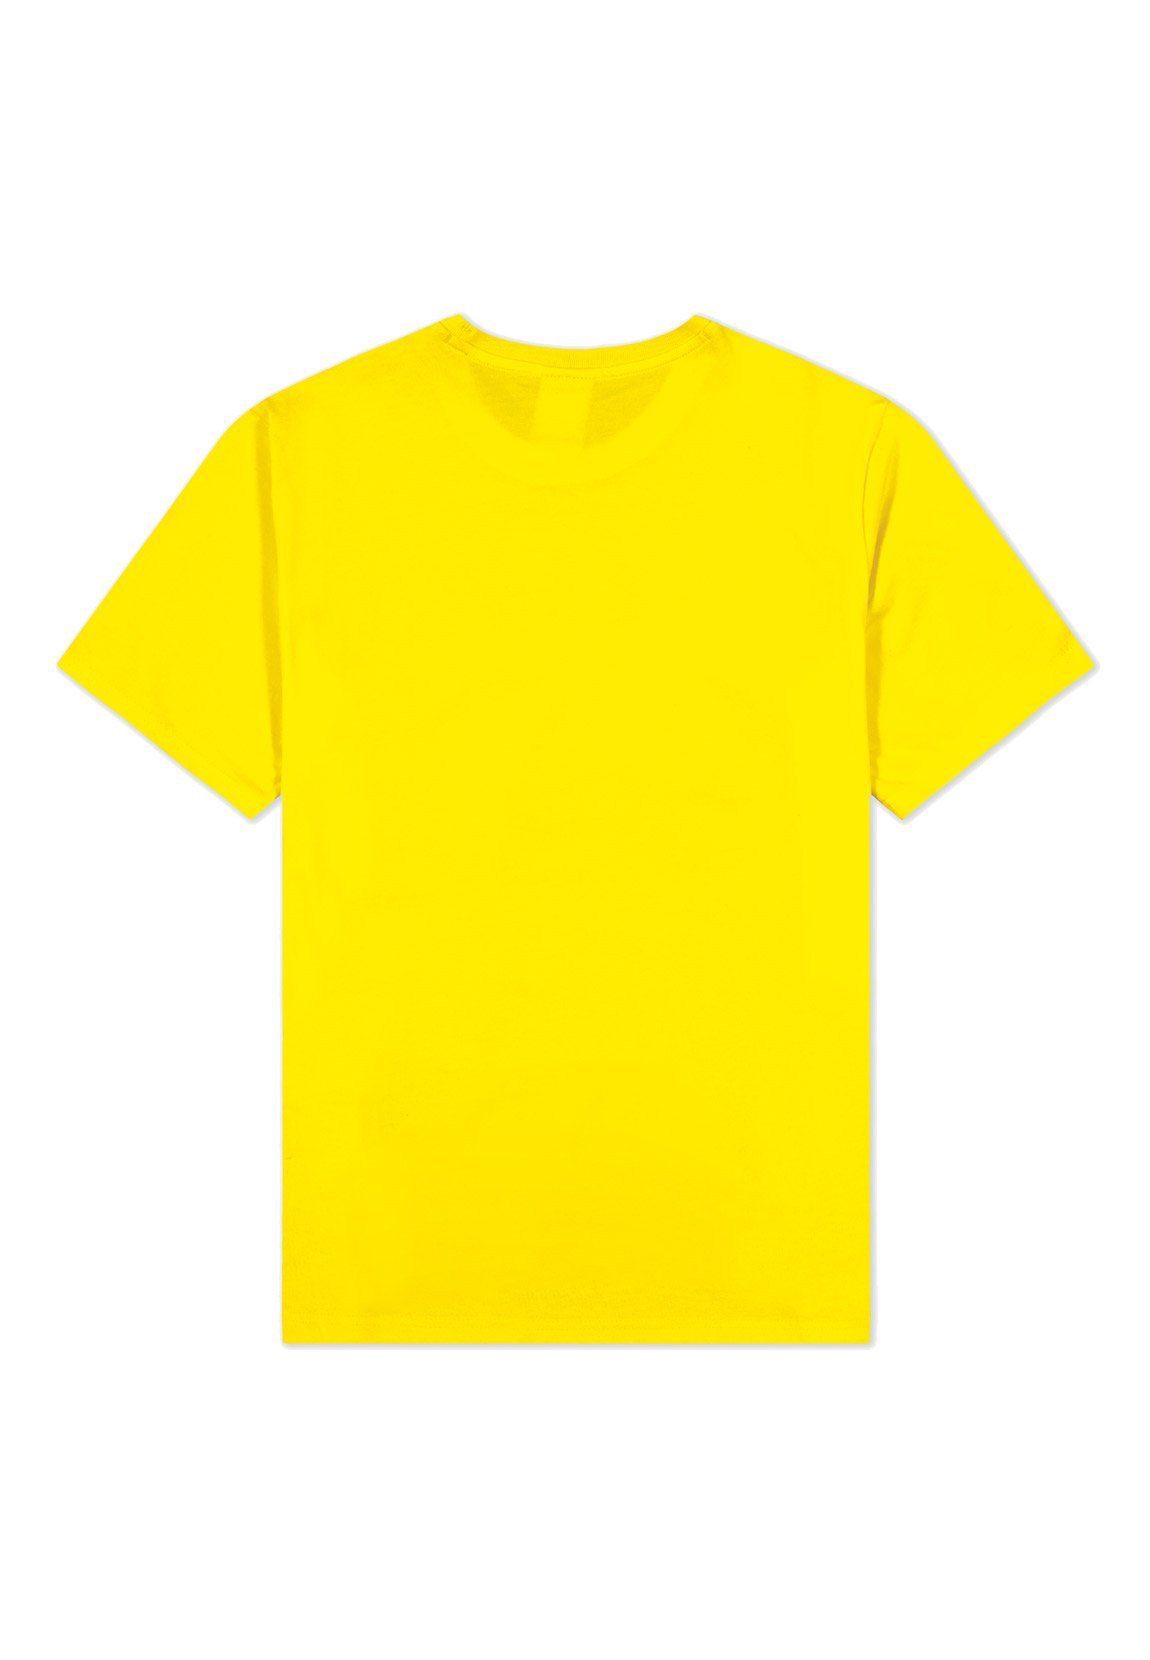 218220 YS002 Champion Herren Champion T-Shirt Gelb BZY T-Shirt